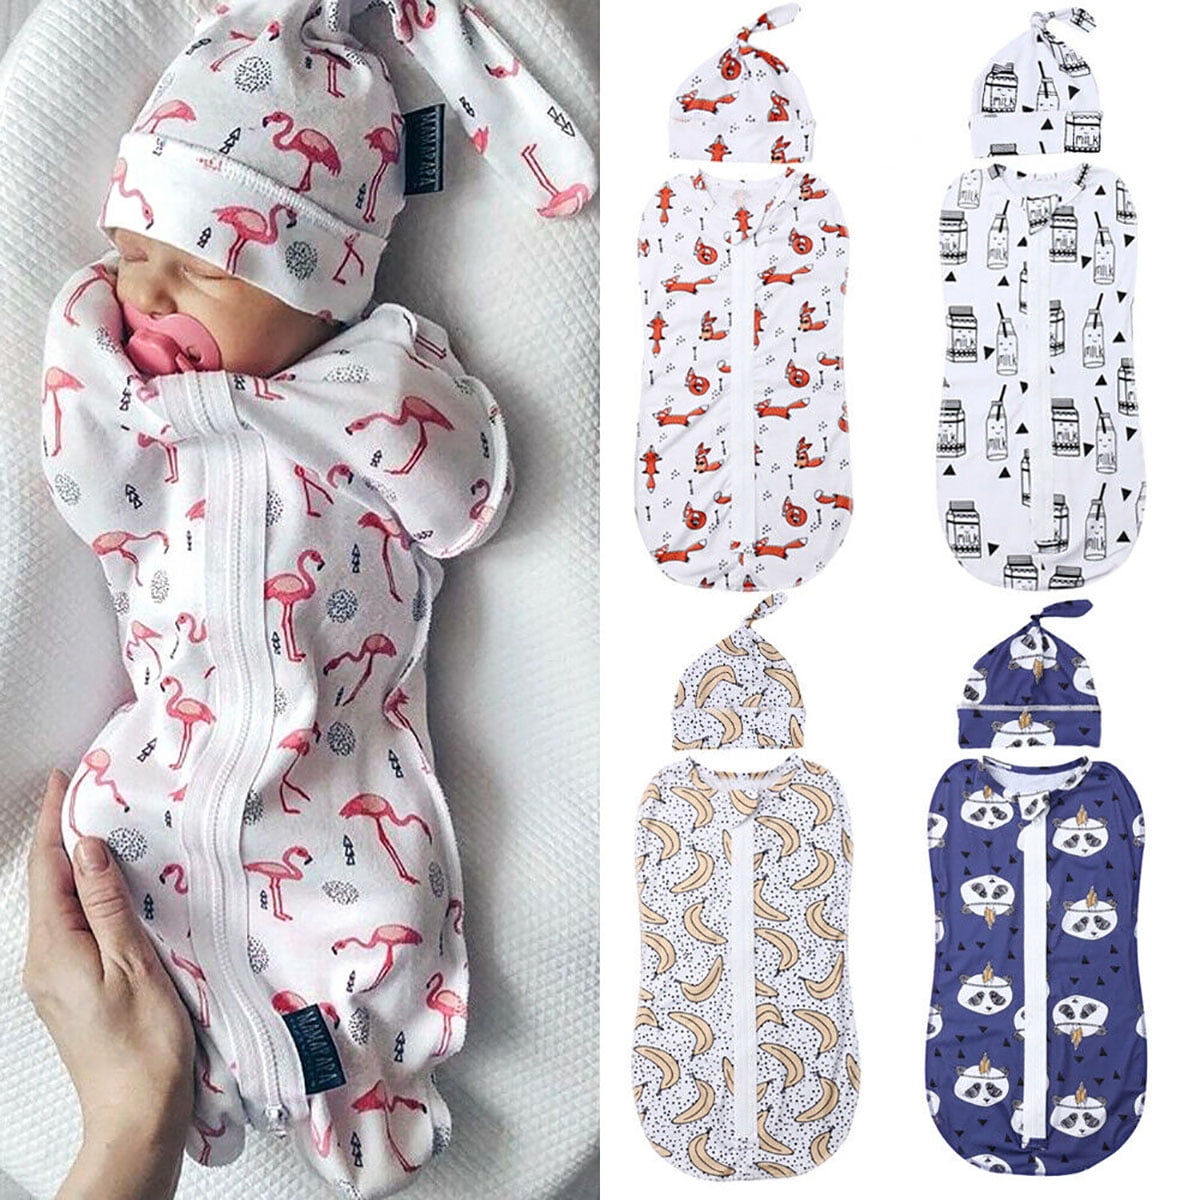 #2 0-3months Adjustable Infant Sleeping Bag Newborn Baby Swaddle Cotton Blanket Wrap Cloth Unisex for Sleepsack Bedding Stroller